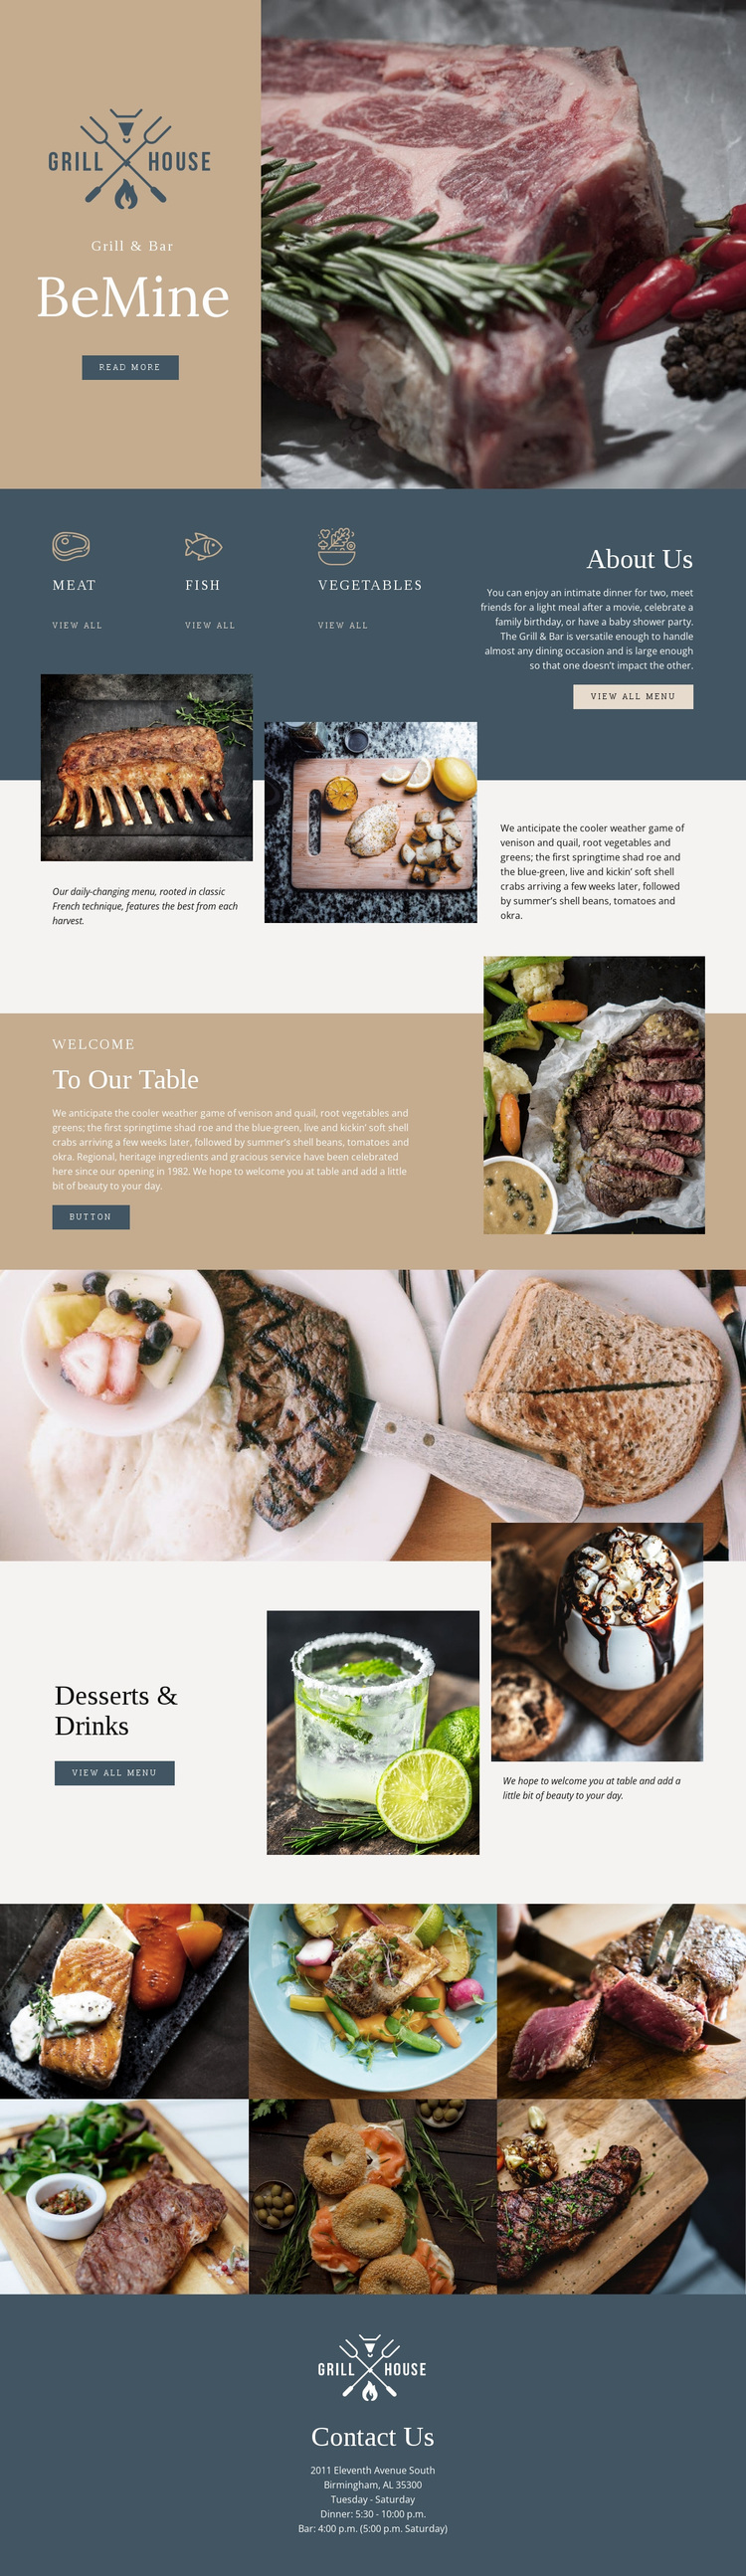 Finest grill house restaurant Website Design